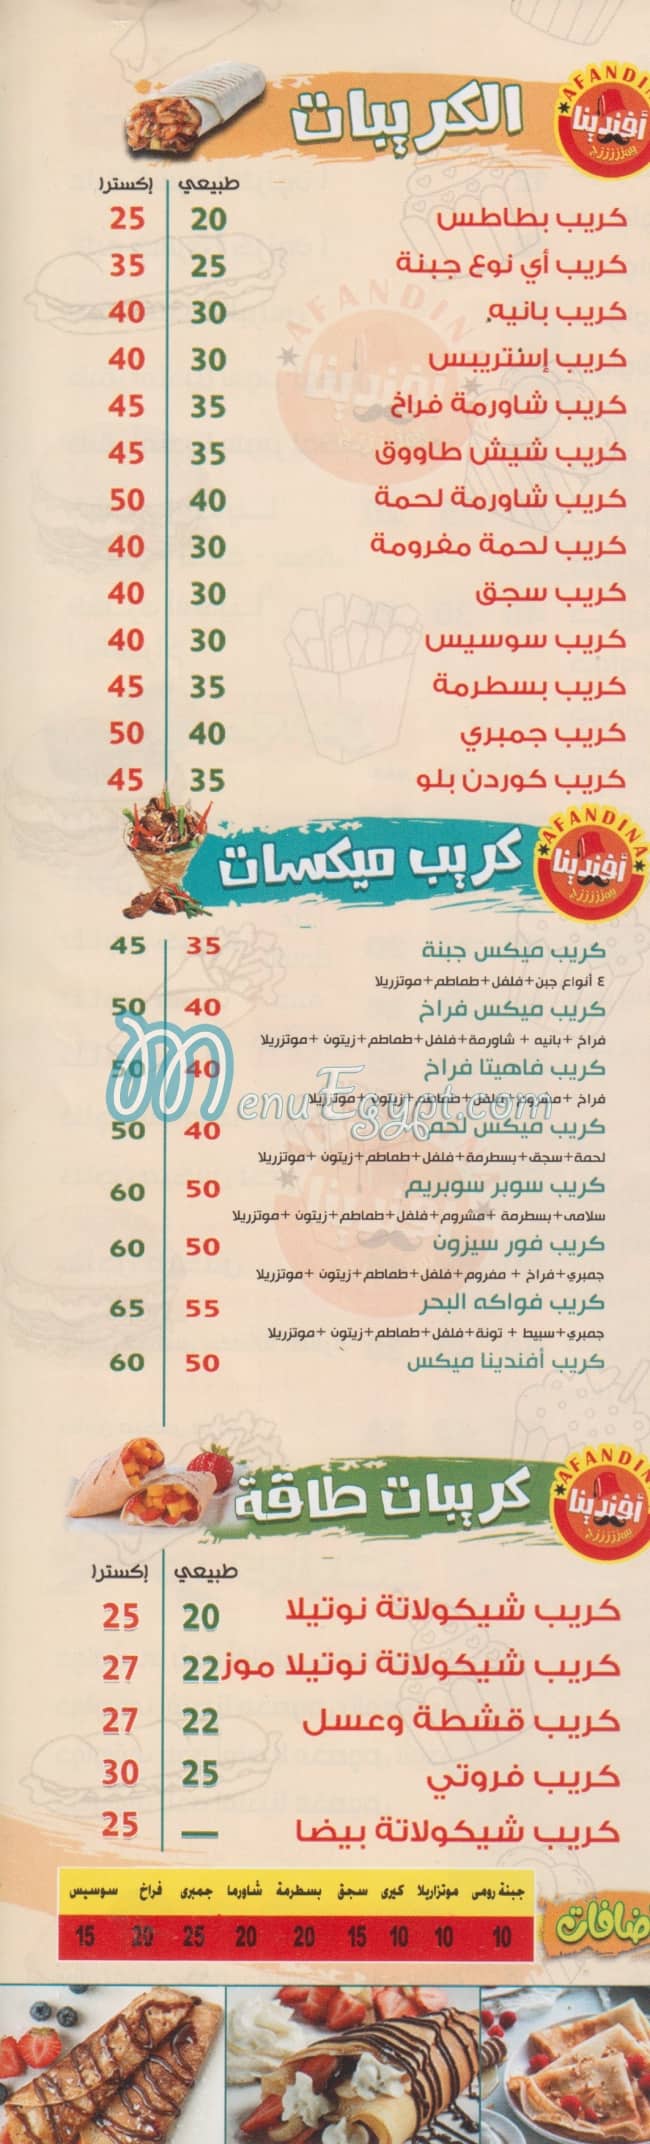 Afndina Dar El Salam menu